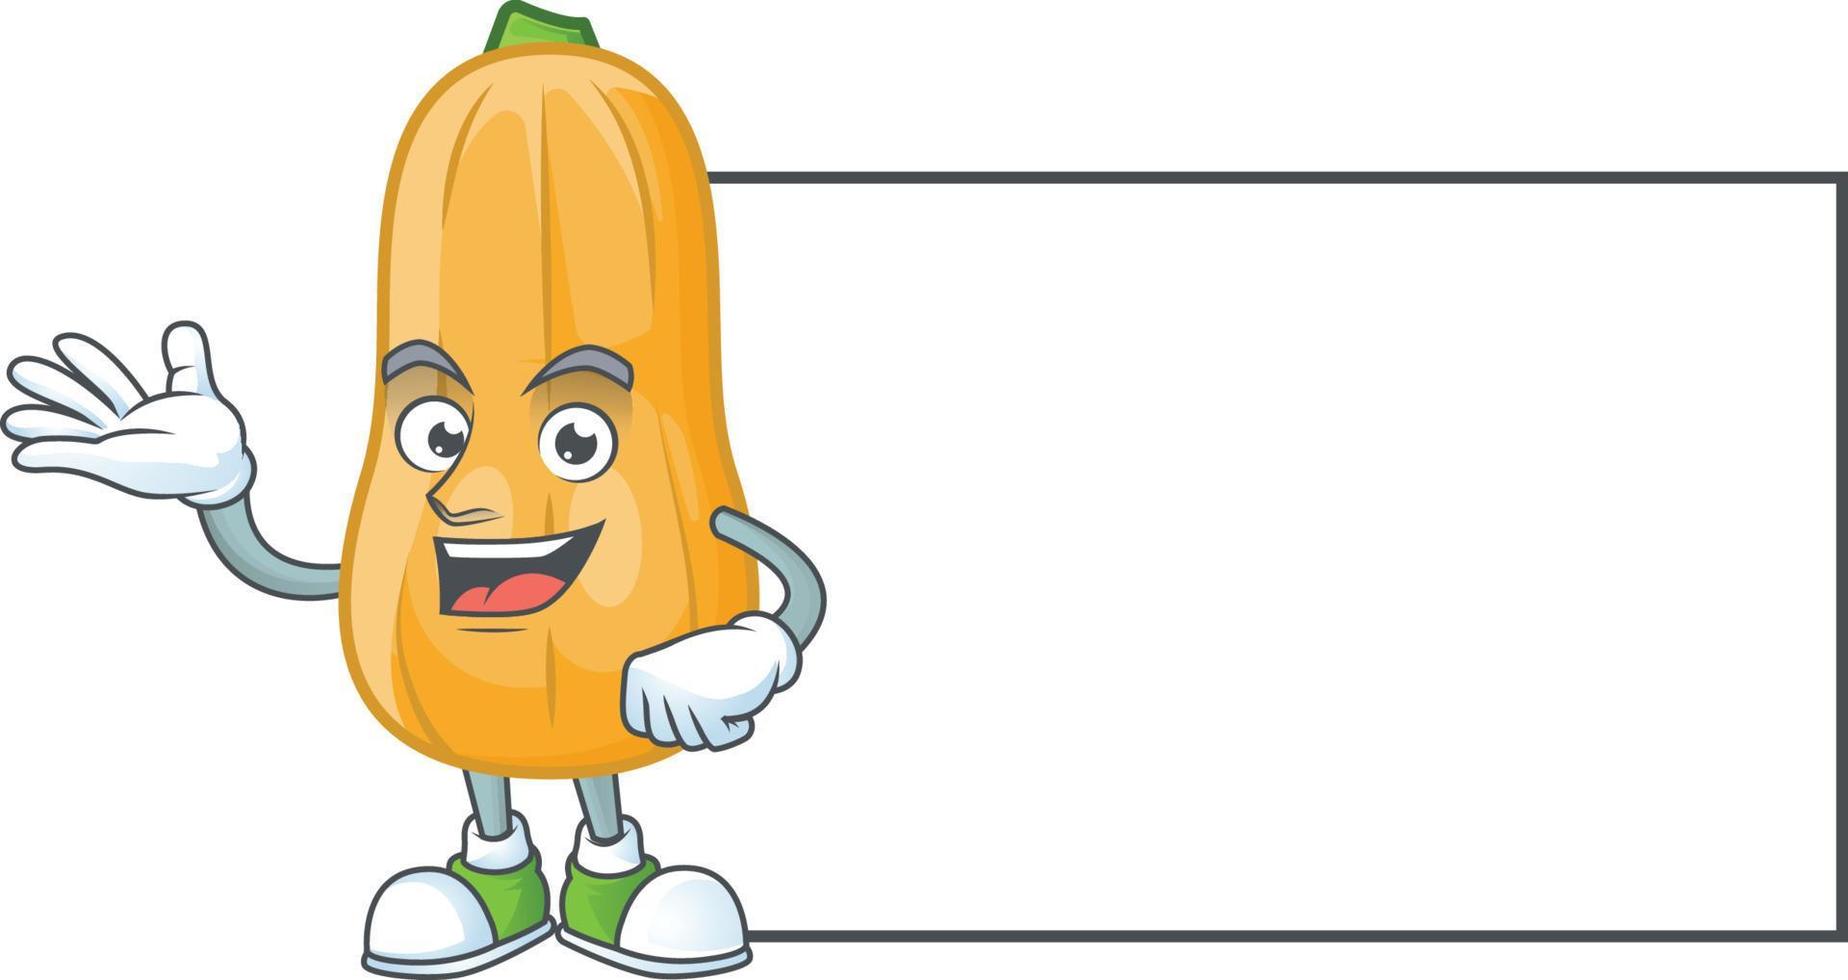 Butternut squash cartoon character style vector